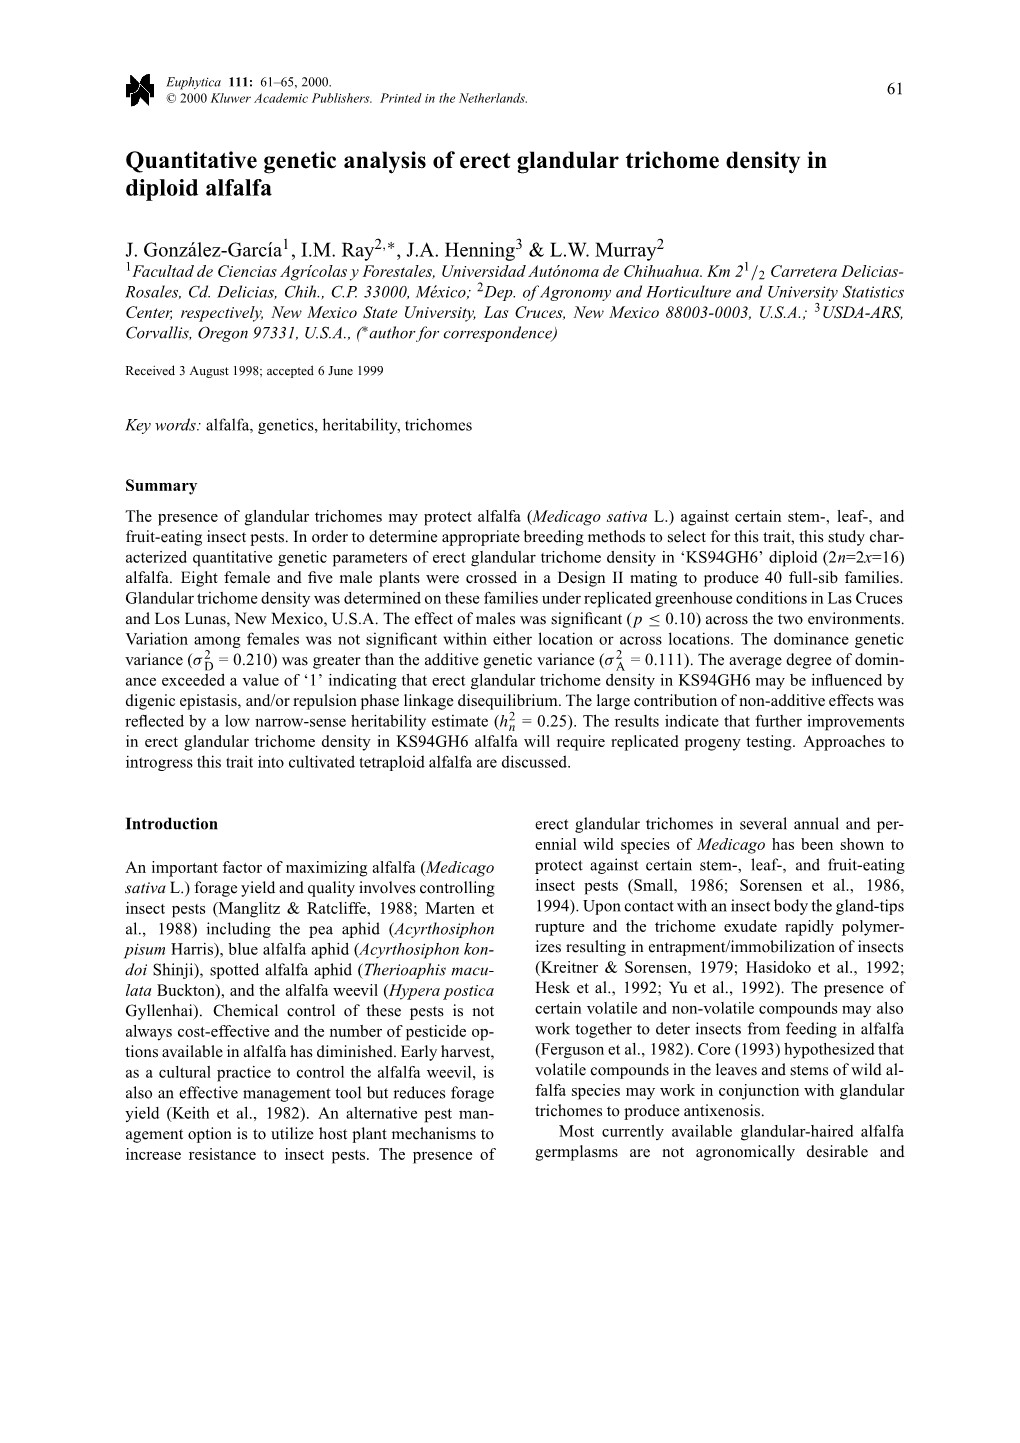 Quantitative Genetic Analysis of Erect Glandular Trichome Density in Diploid Alfalfa